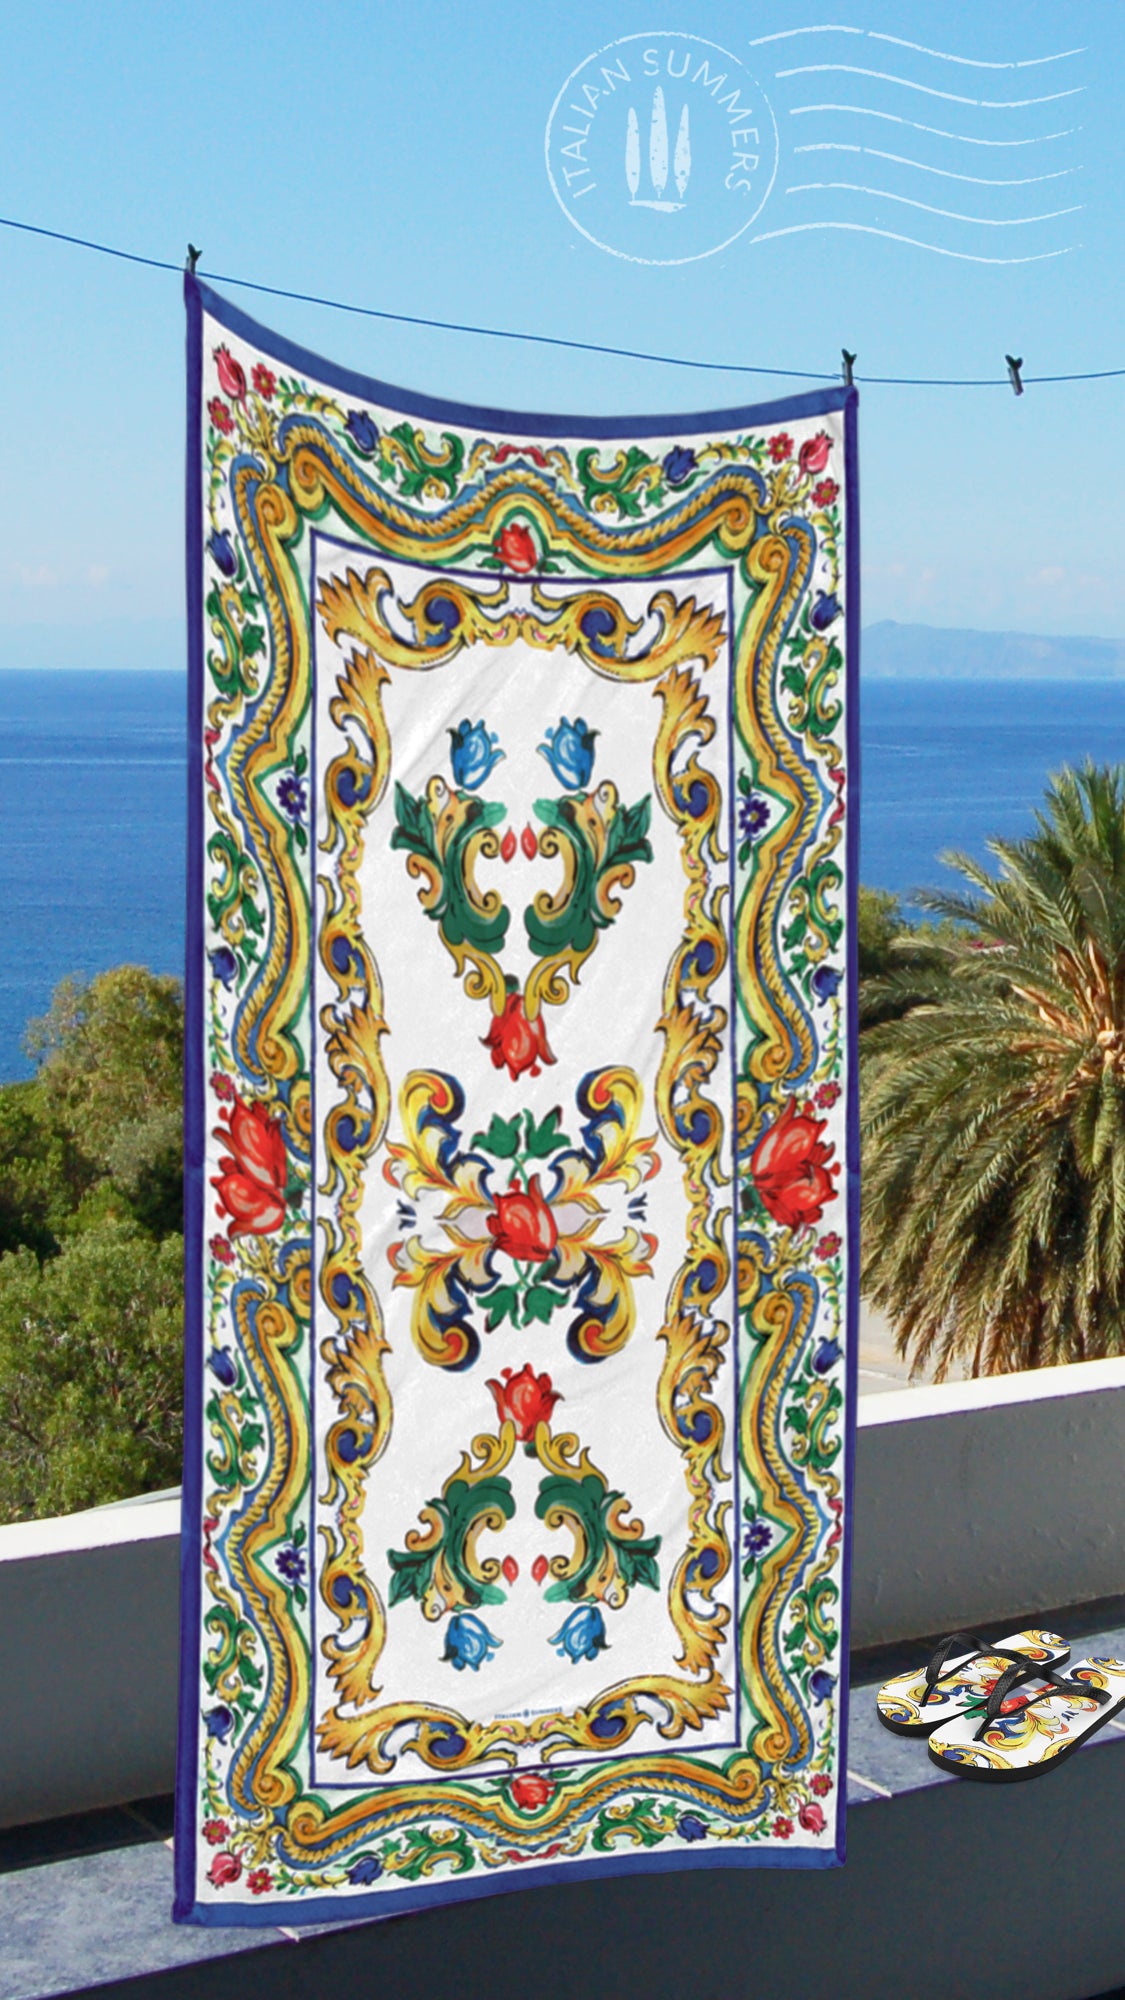 On the Capri Coast Hand Towel